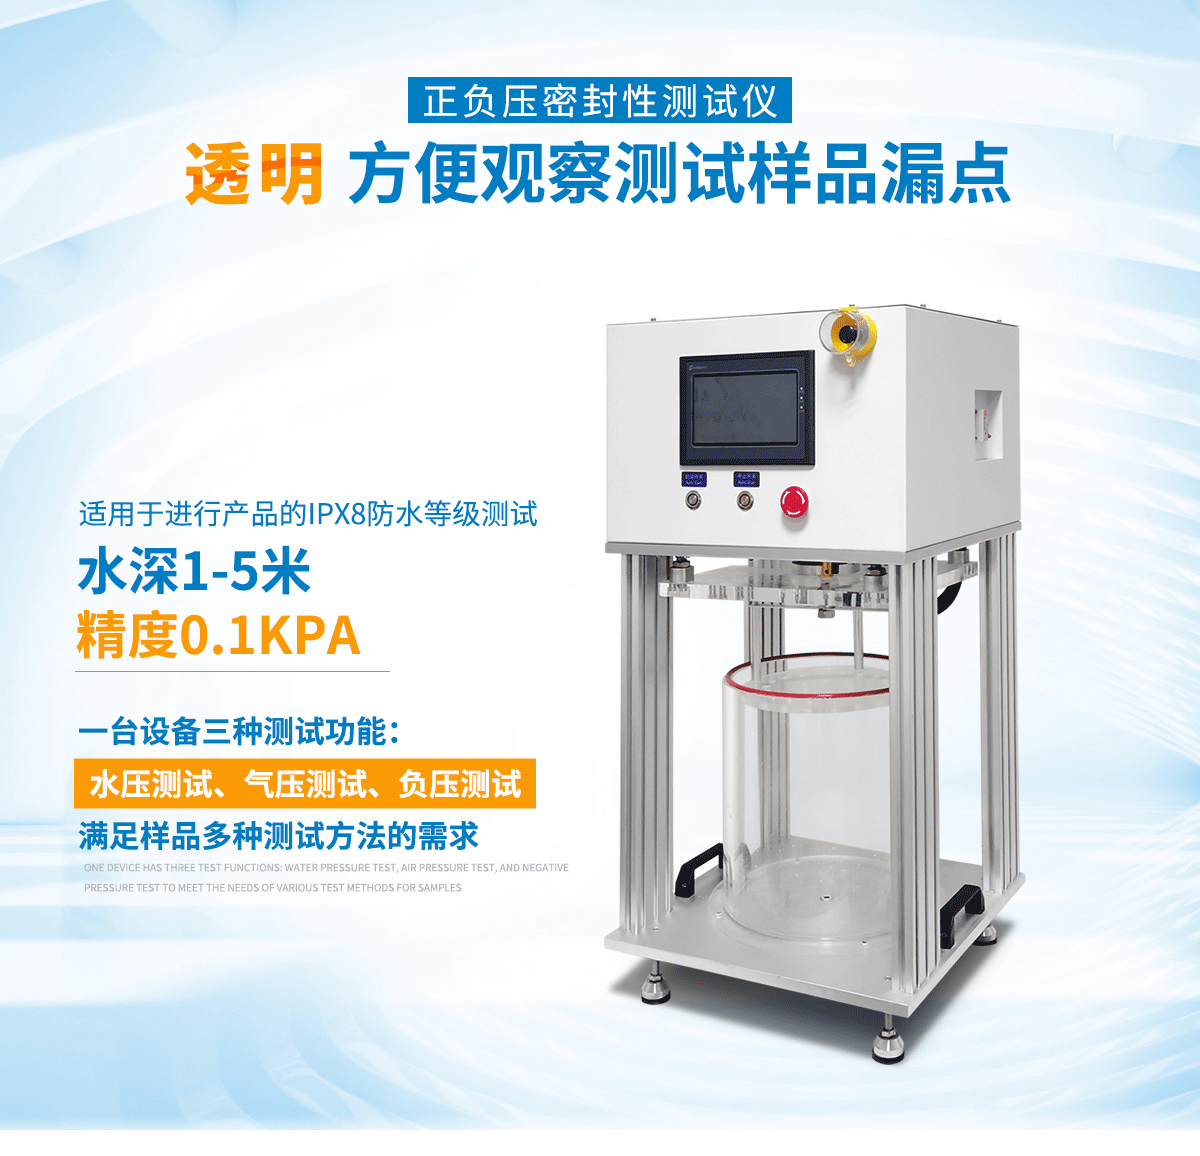 Positive and negative pressure 5 meters leak detection machine